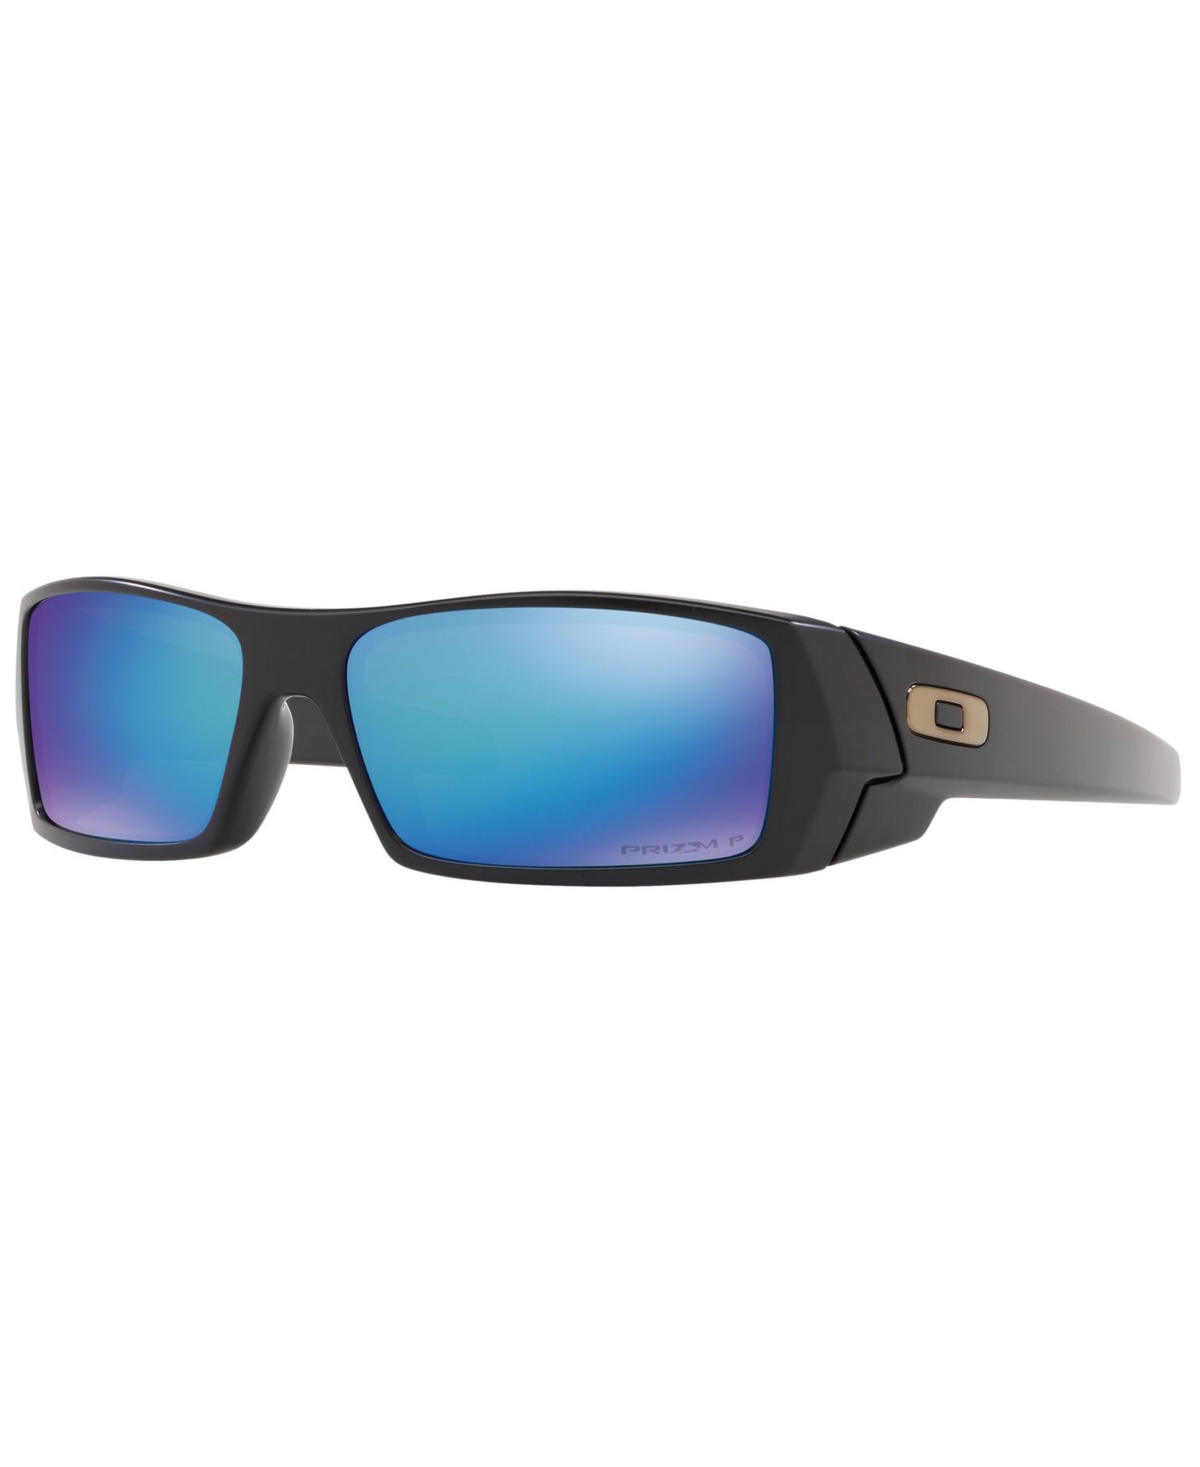 Polarized Sunglasses, OO9014 60 Gascan - MATTE BLACK/PRIZM SAPPHIRE POLARIZED